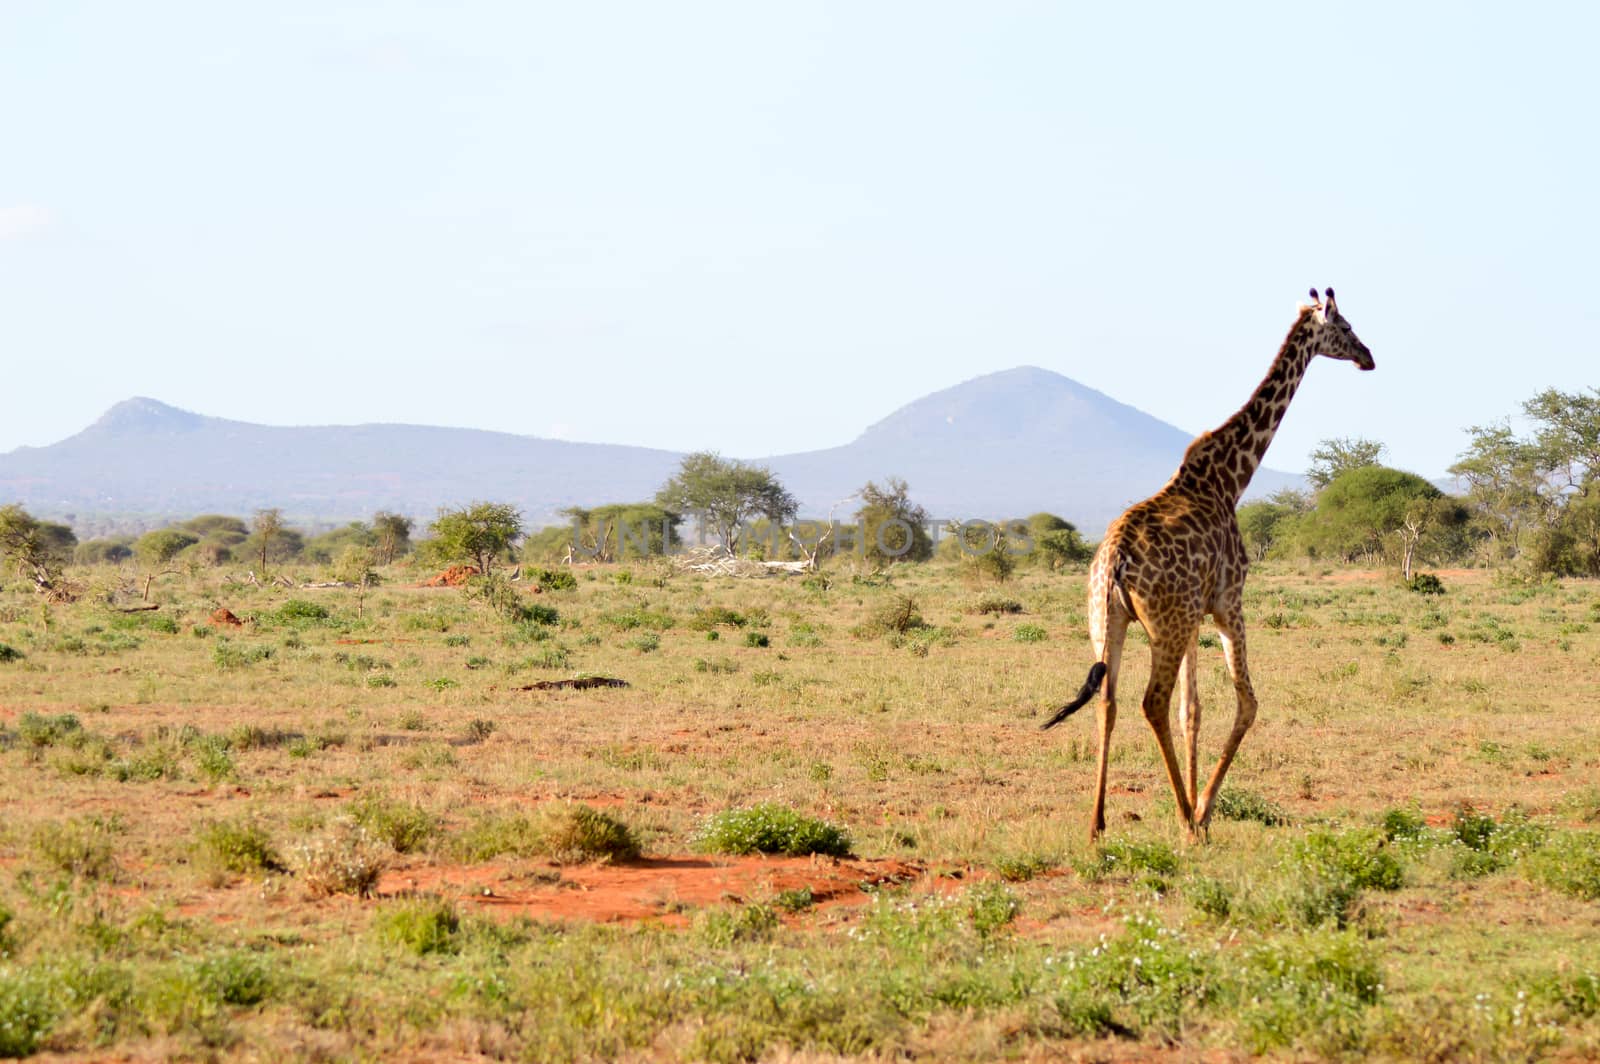 Giraffe in the savanna  by Philou1000